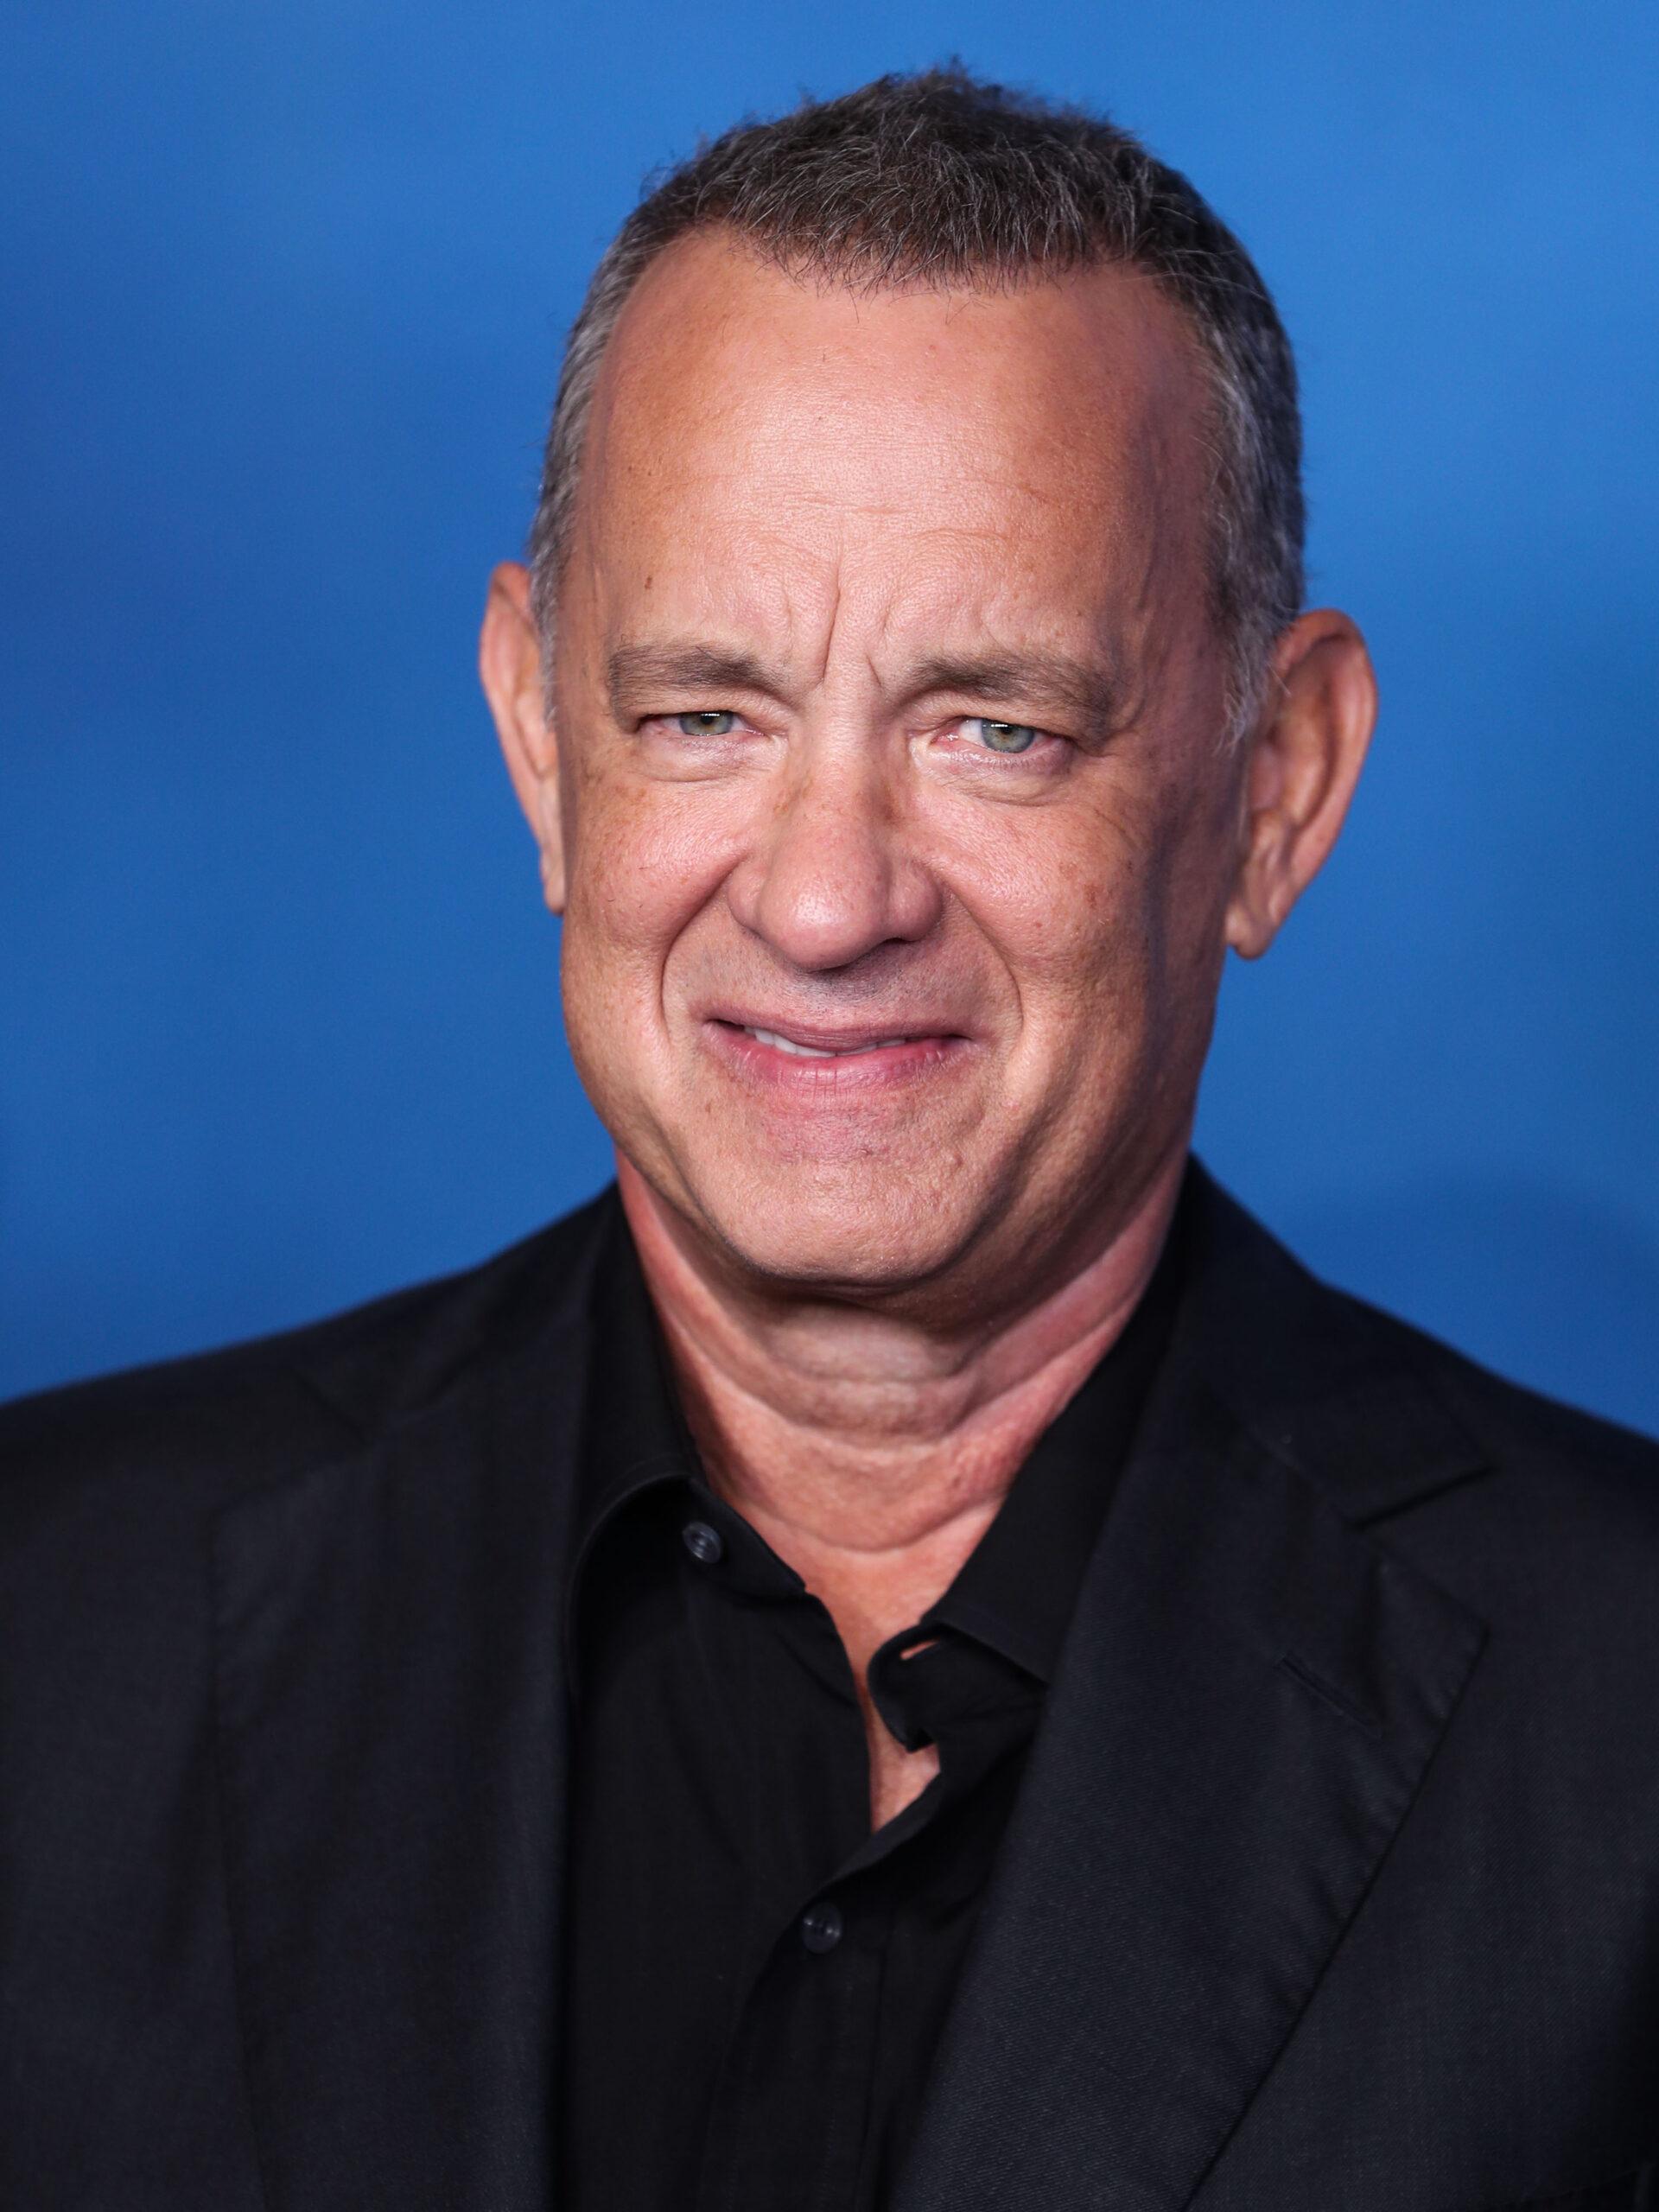 Tom Hanks showed up at the Los Angeles Premiere Of Apple Original Films in a black suit.' 'Finch'